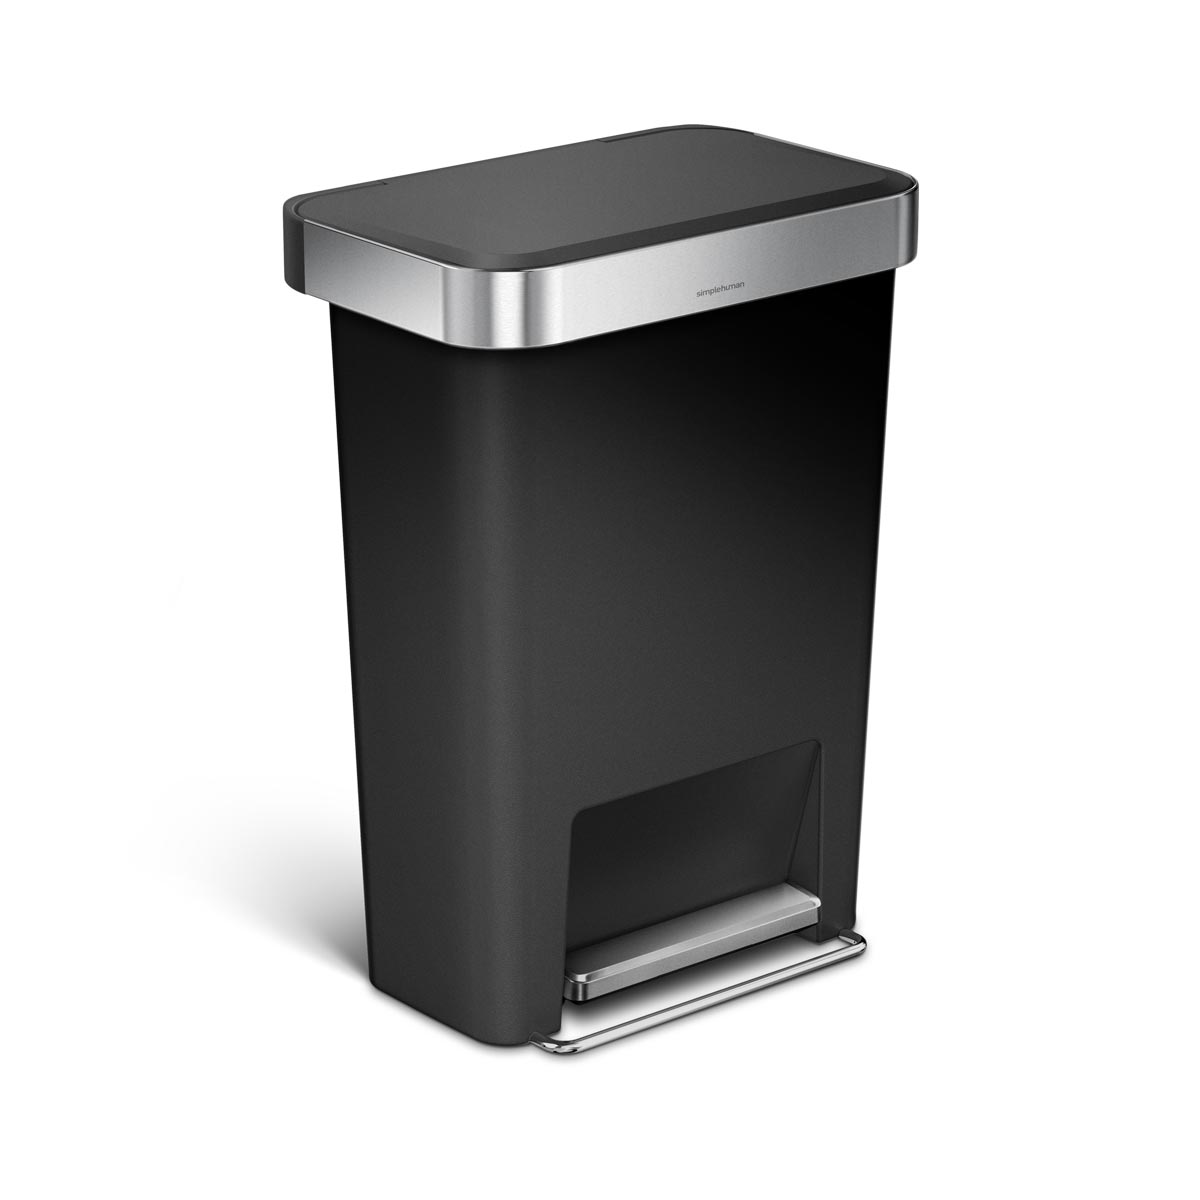 simplehuman 45 litre rectangular step can with liner pocket, black plastic